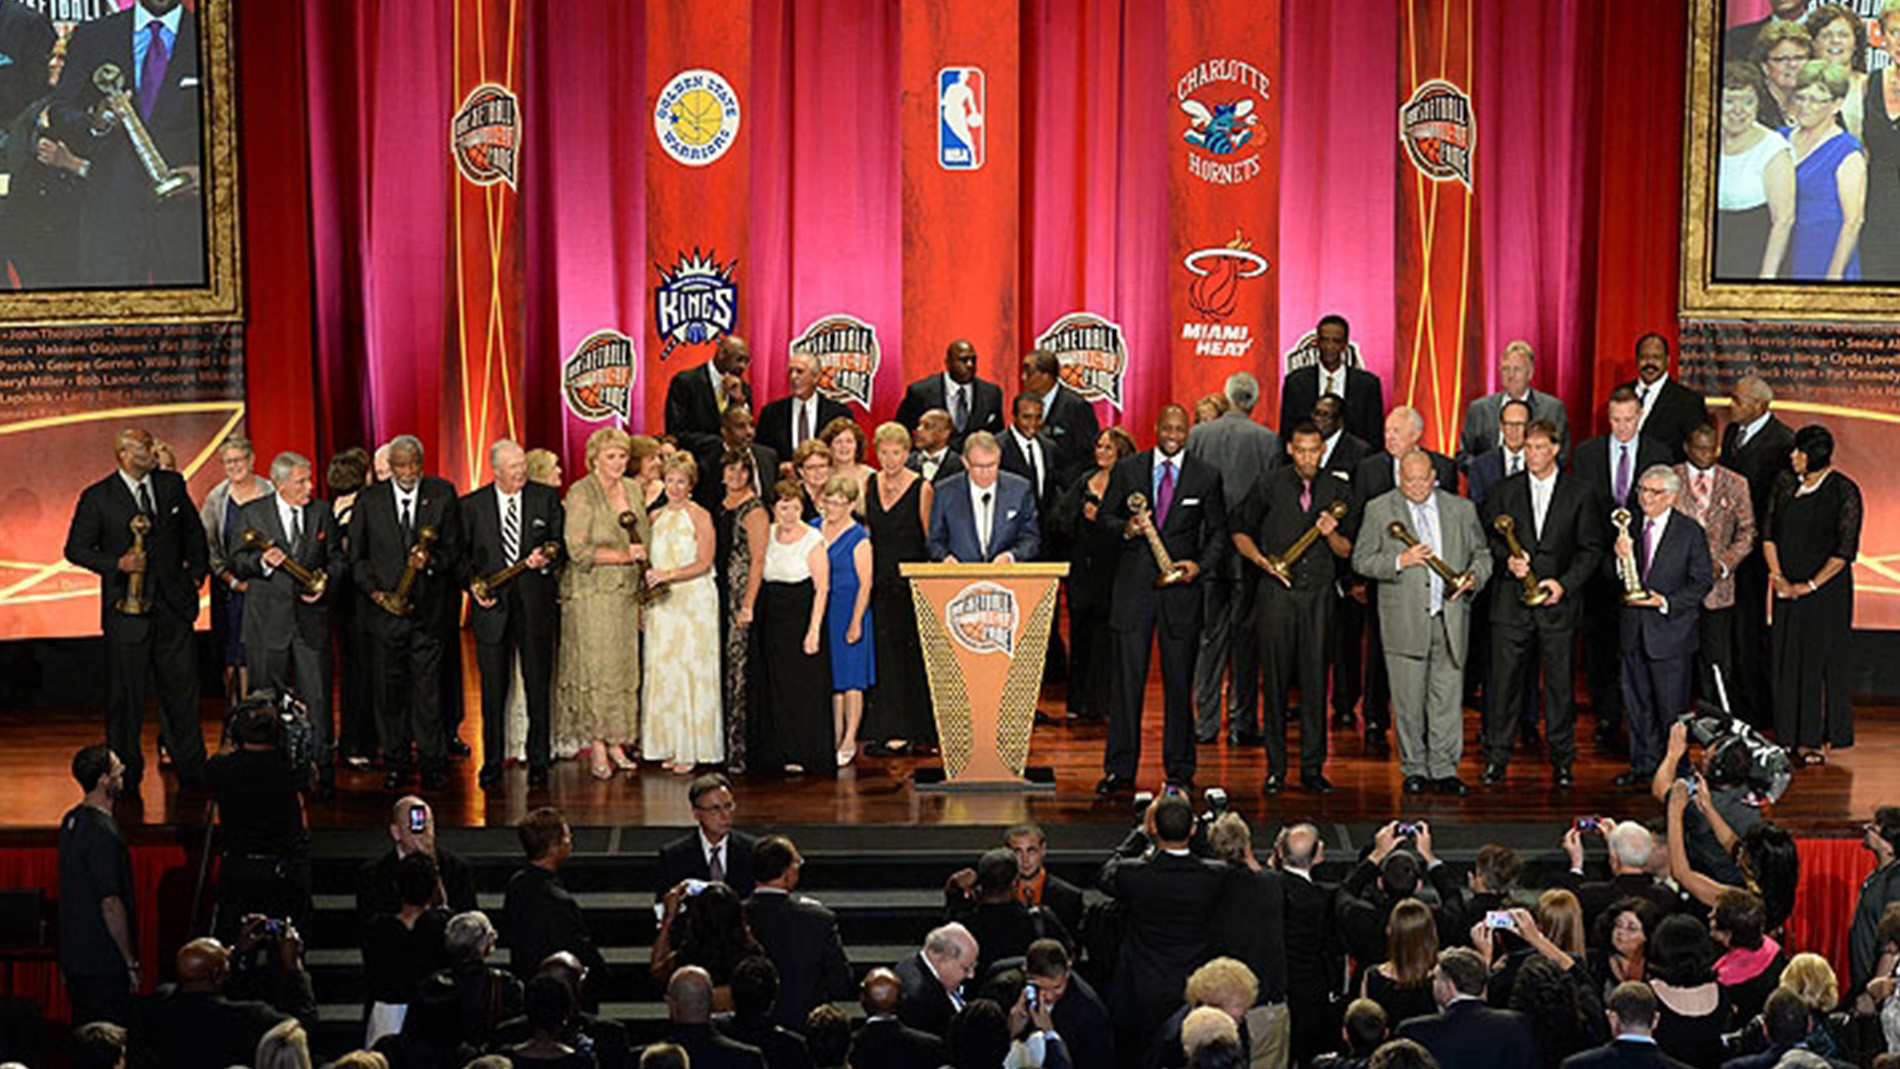 Basketball Hall of Fame Enshrinement